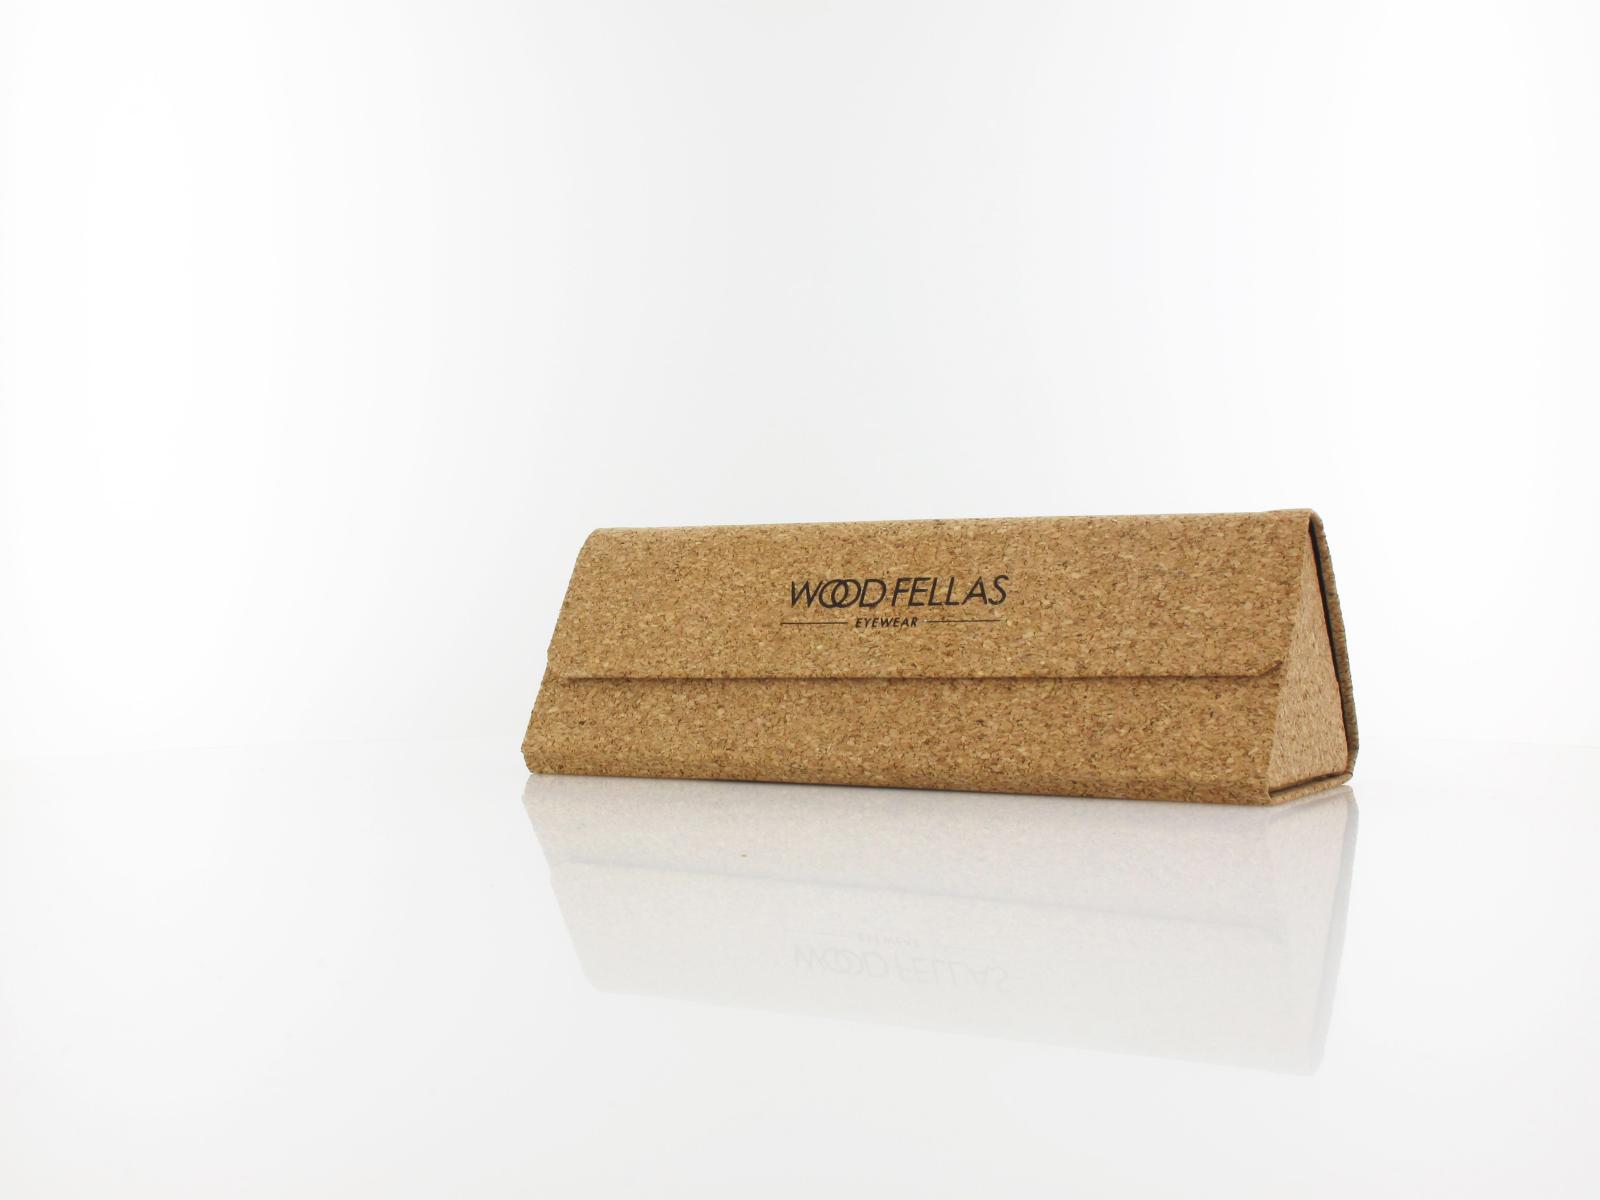 Wood Fellas | Kipfenberg Wood Carbon 10989 5945 55 | walnut